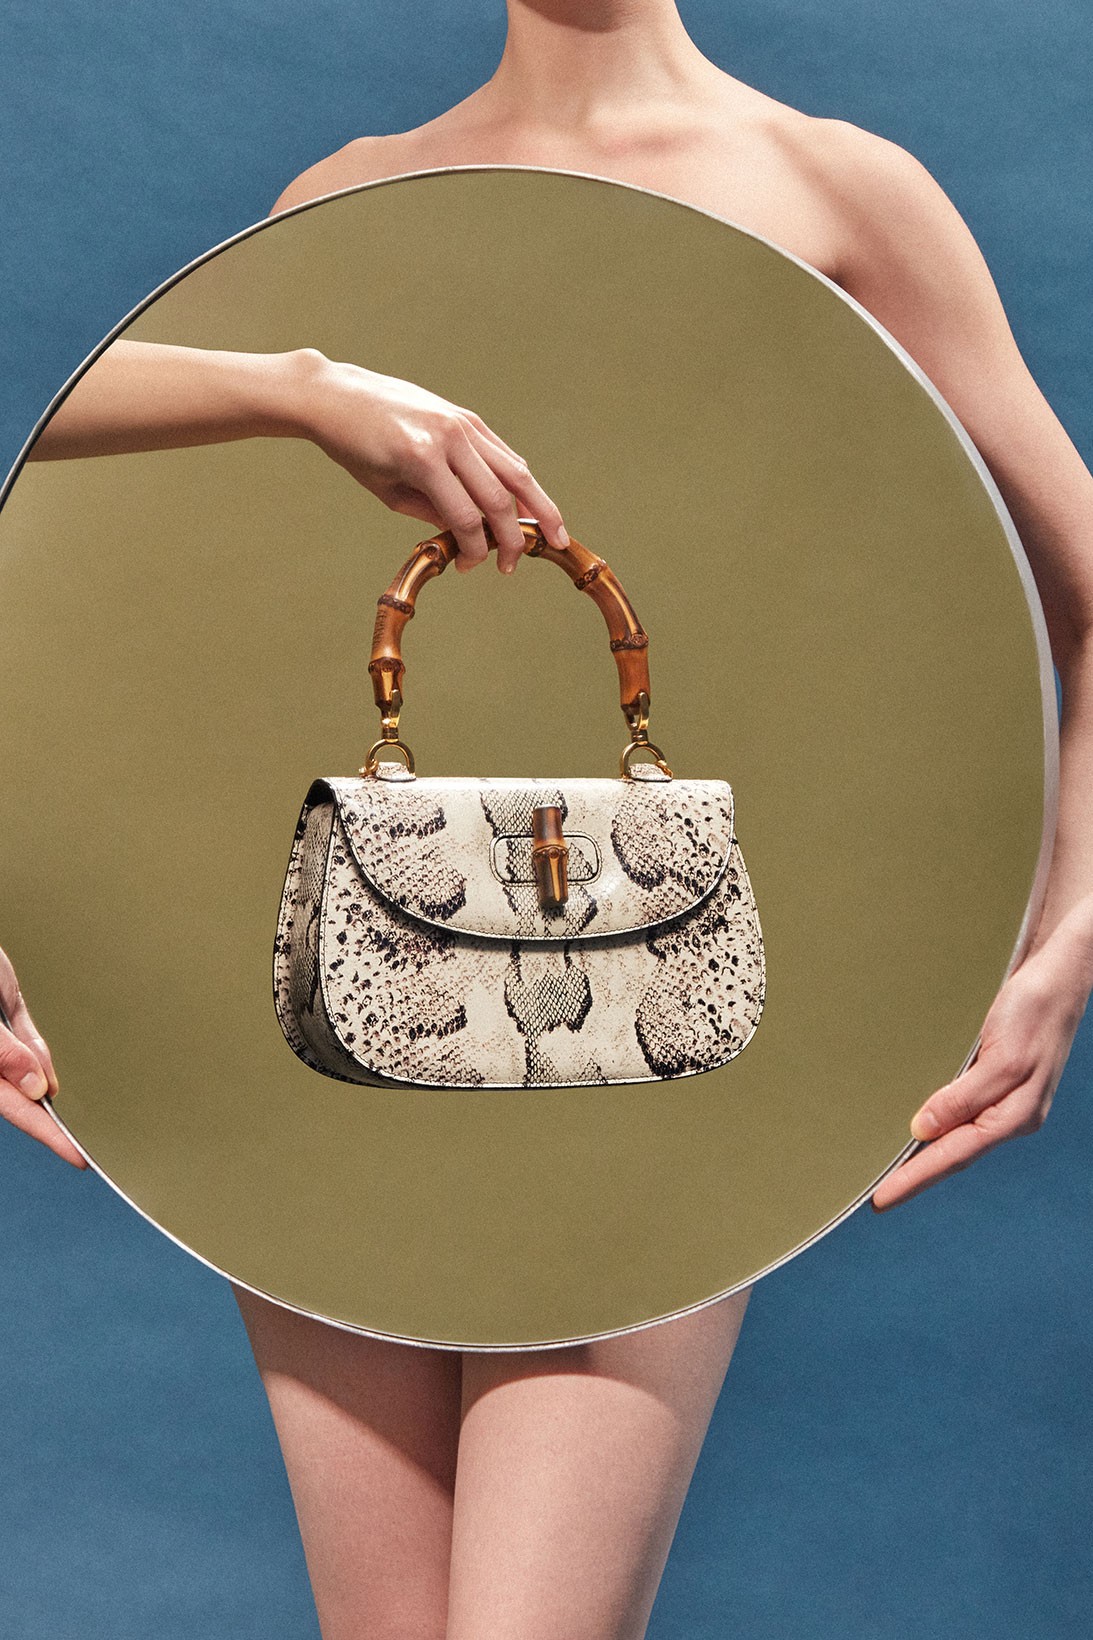 Алессандро Микеле представил новую версию сумки Gucci Bamboo (фото 8)